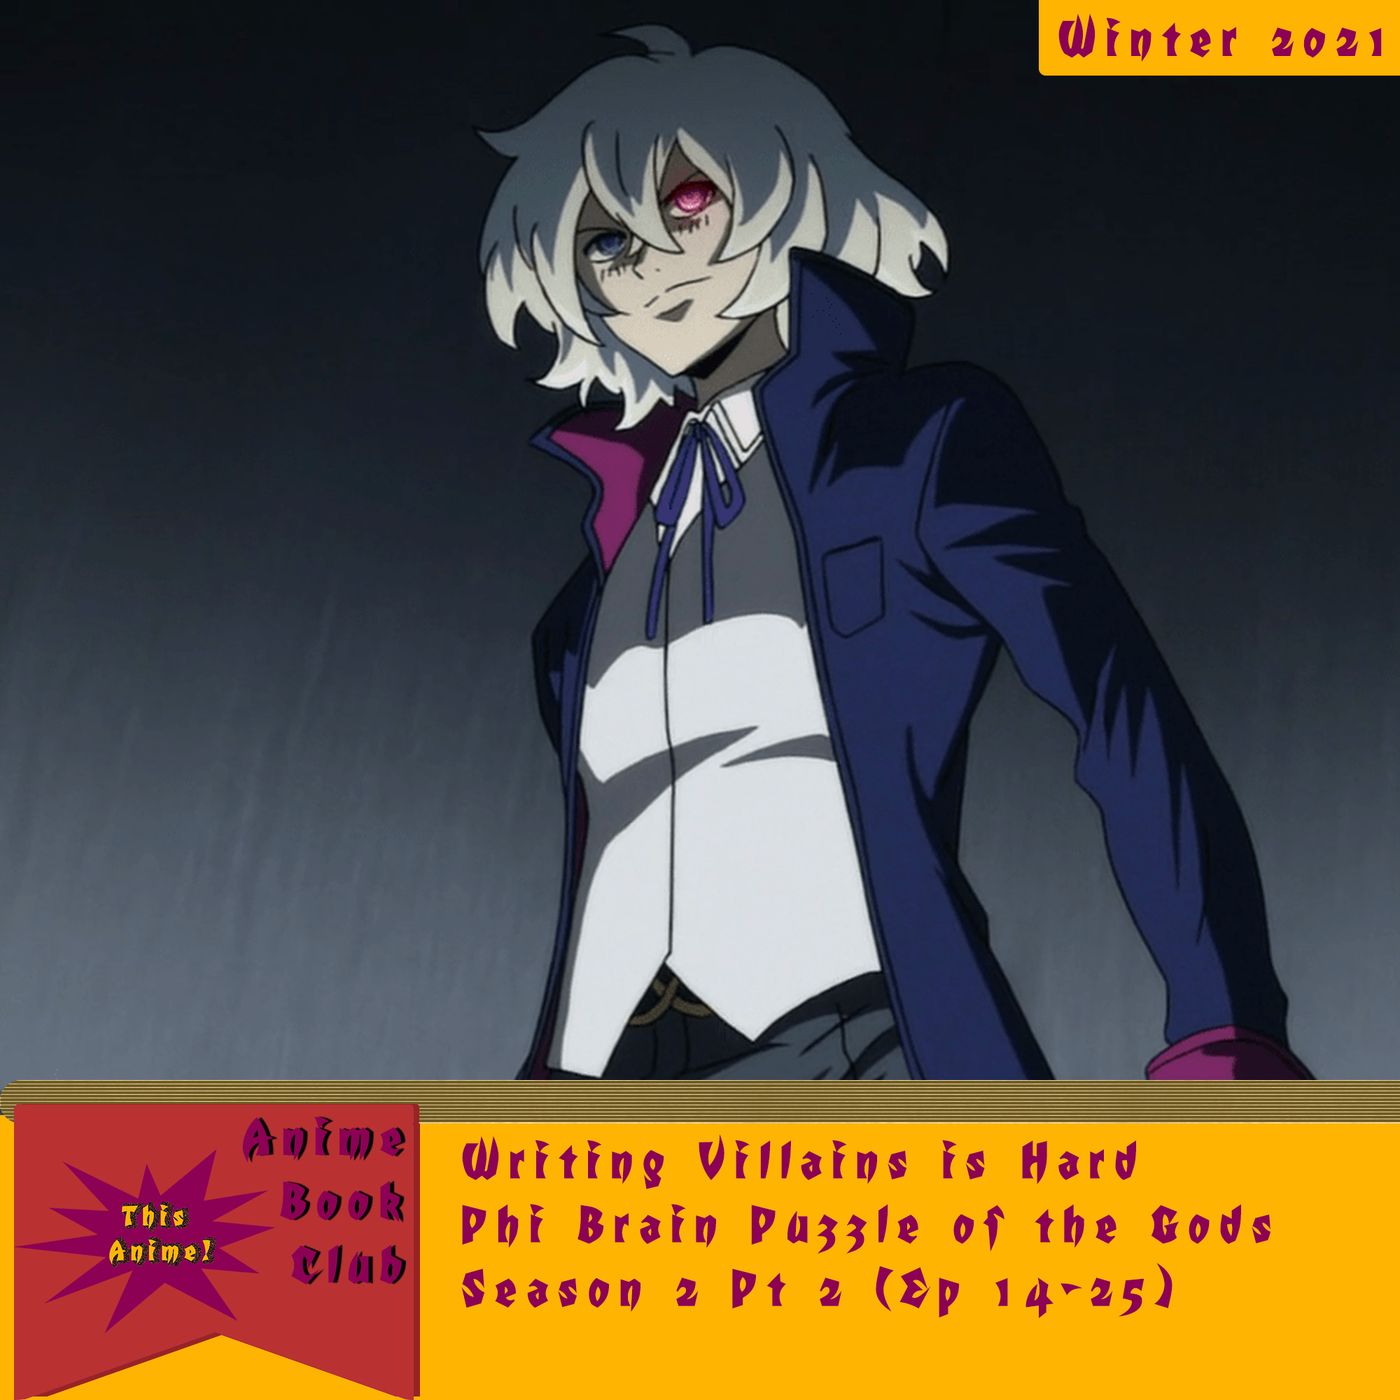 Anime Book Club Winter 2021: Writing Villains is Hard: Phi Brain Puzzle of the Gods Season 2 Pt 2 (Ep 14-25)